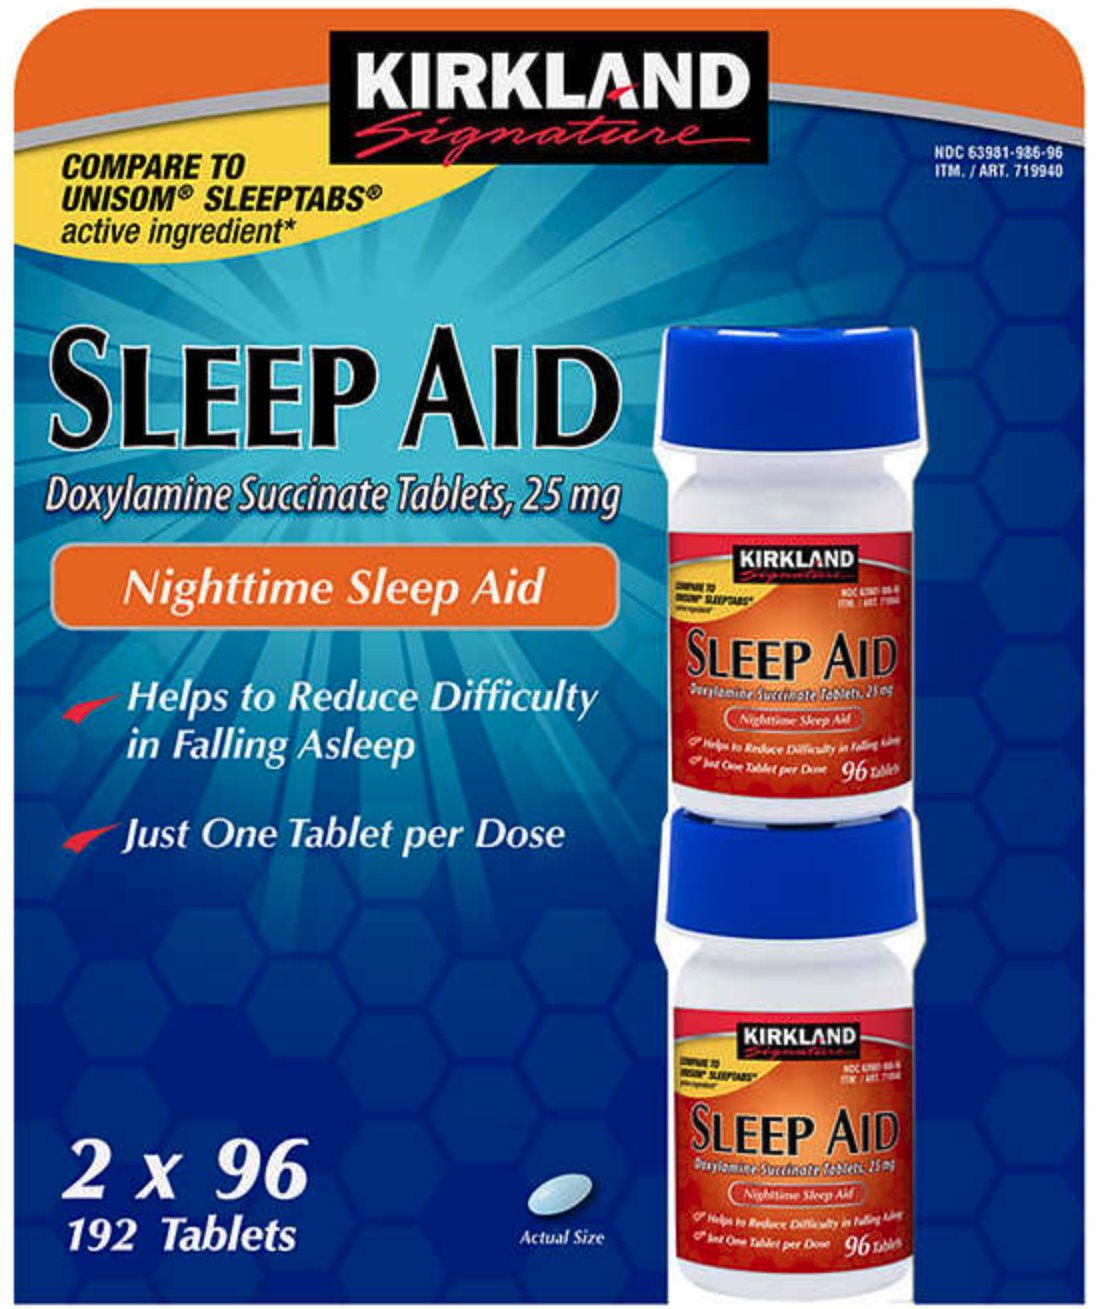 Kirkland Signature Sleep Aid Doxylamine Succinate 25 Mg 2 X 96 Tablets 192-count